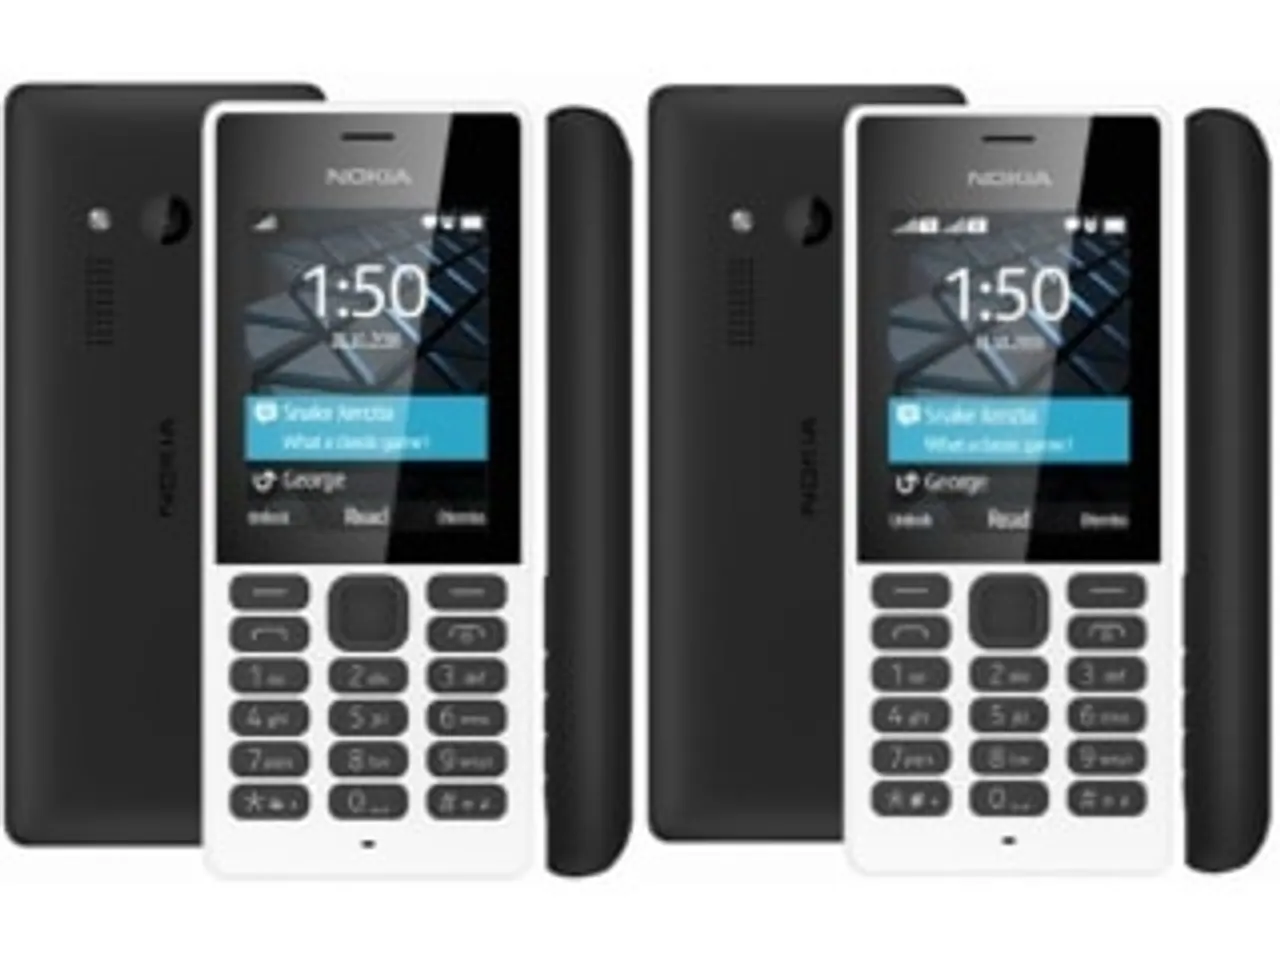 Nokia 150 dual SIM